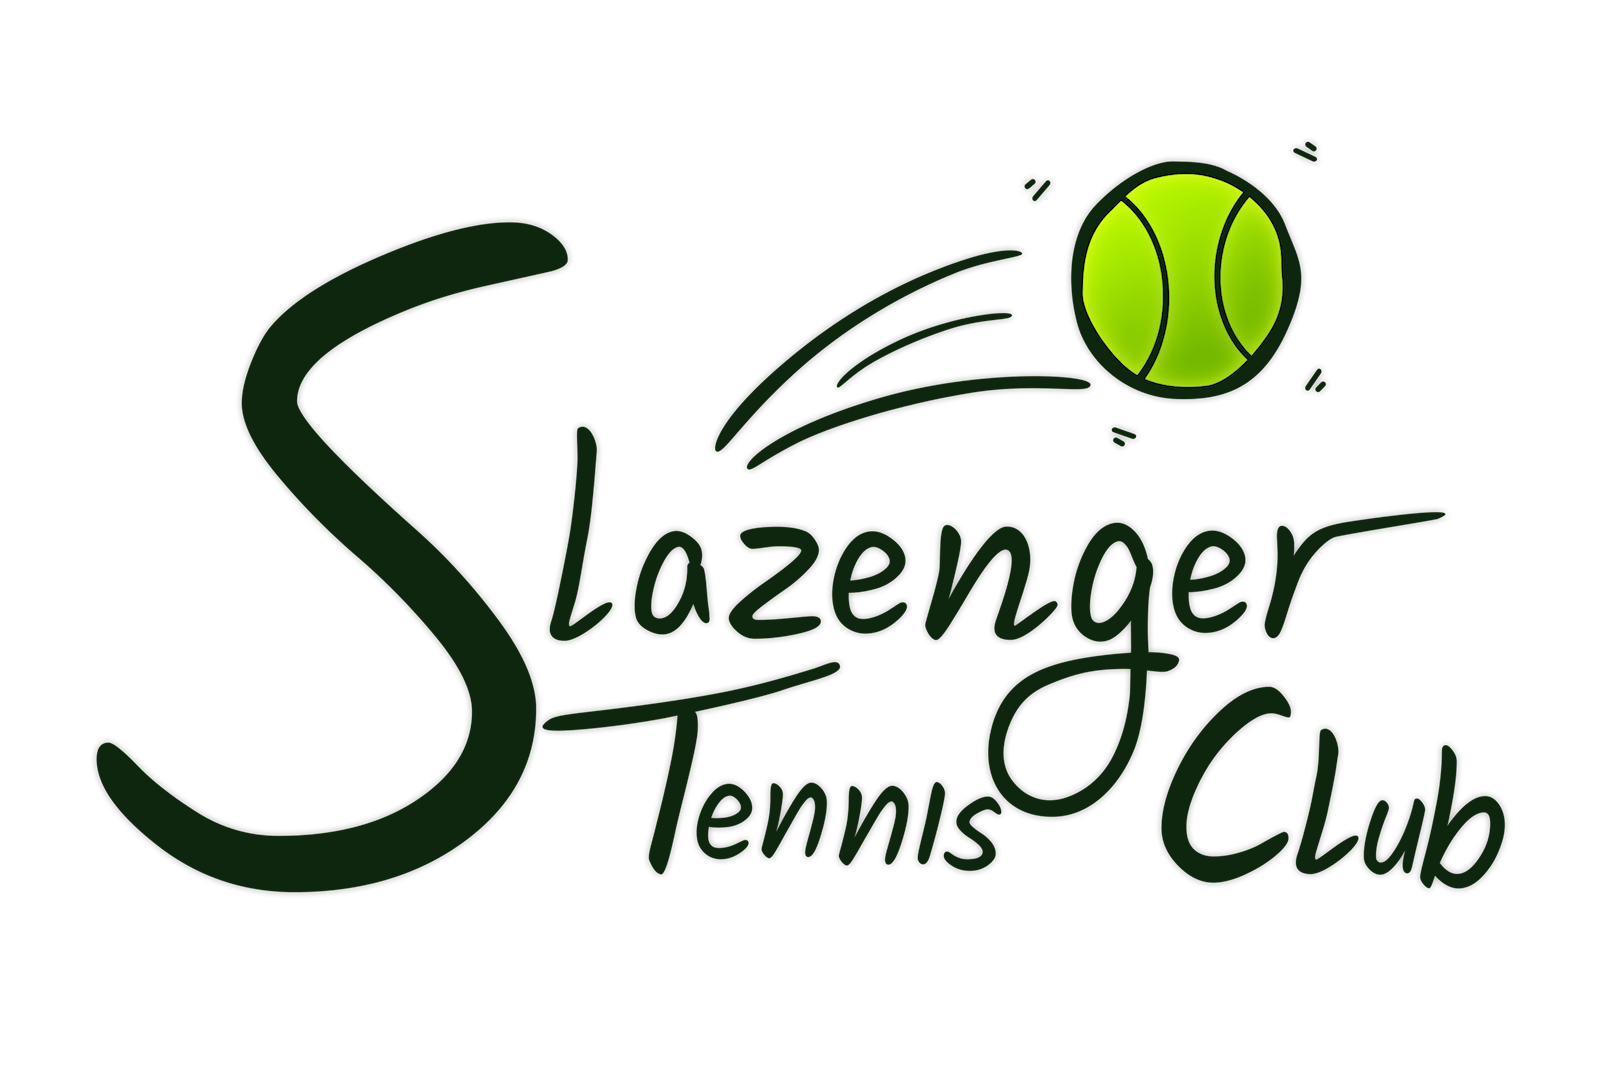 Slazenger Tennis Club